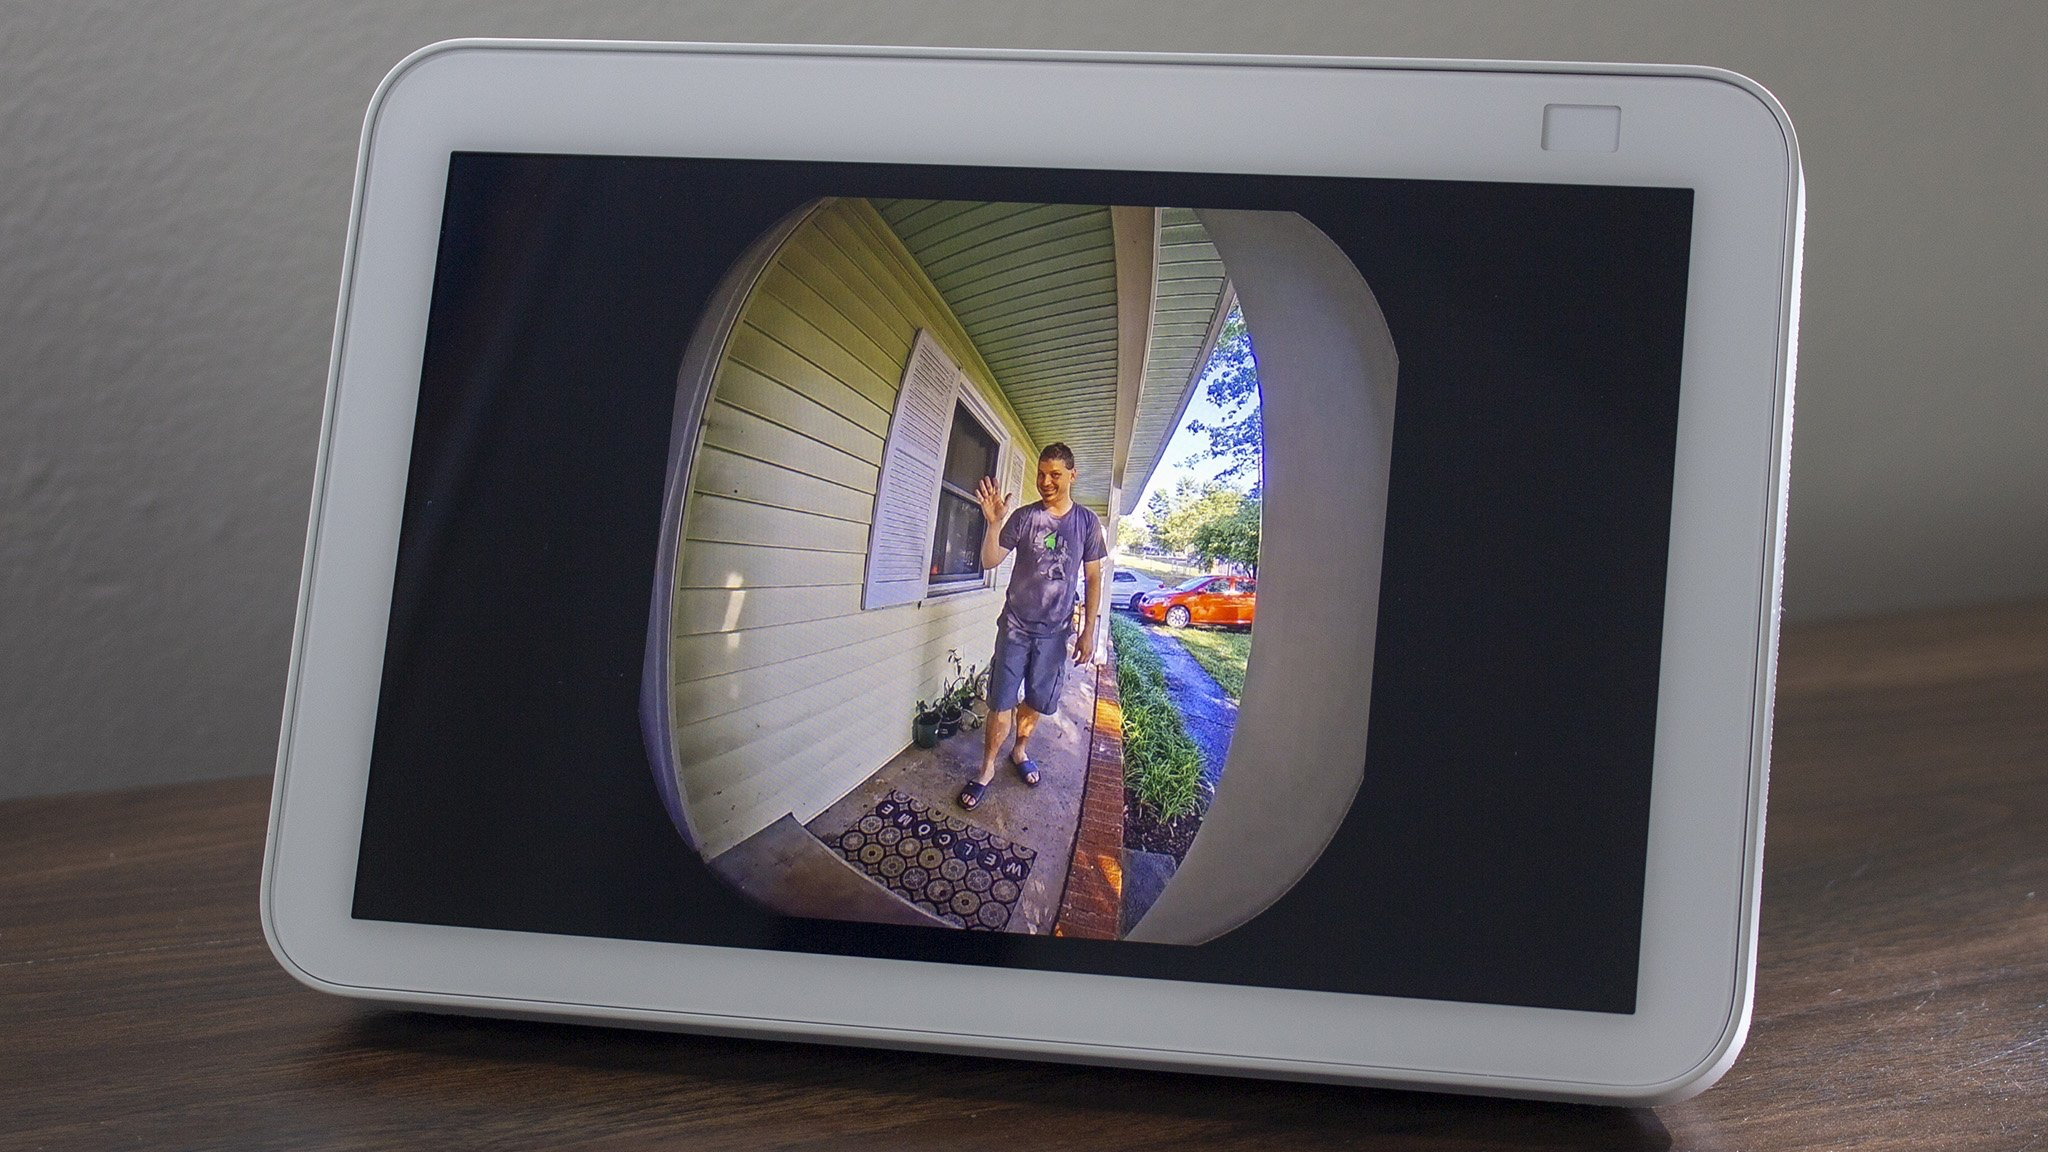 Video doorbell call with Amazon Echo Show 5